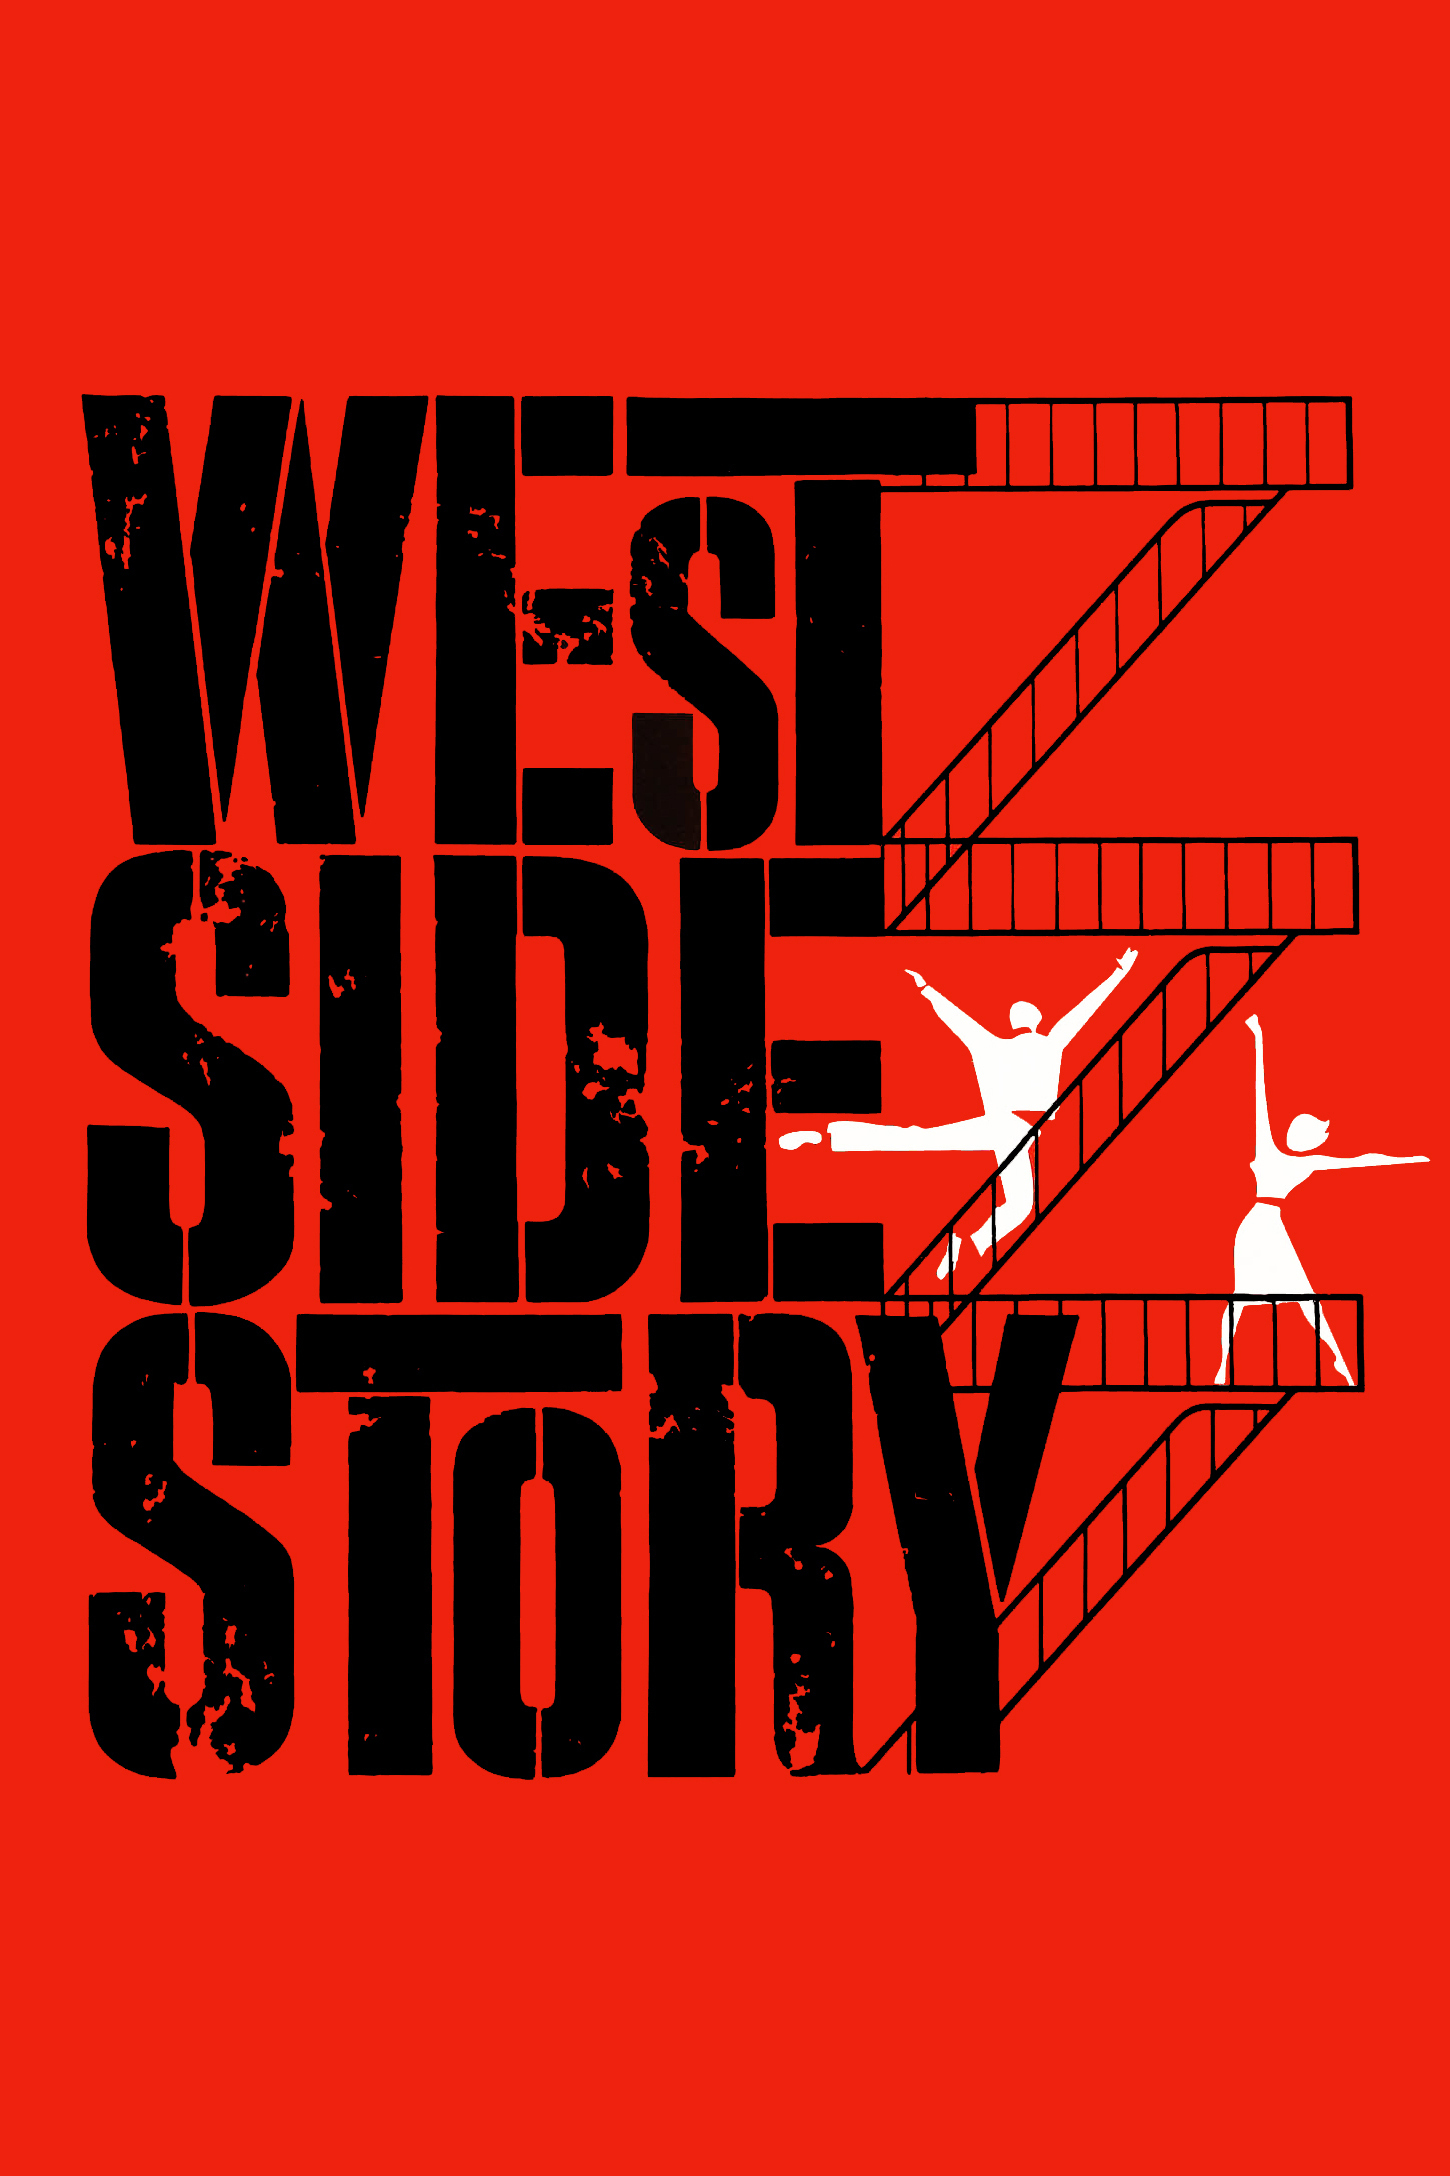 W stories. West Side story Постер. Вестсайдская история / West Side story (1961). West Side story 2021 Постер. Вестсайдская история 1961 Постер.